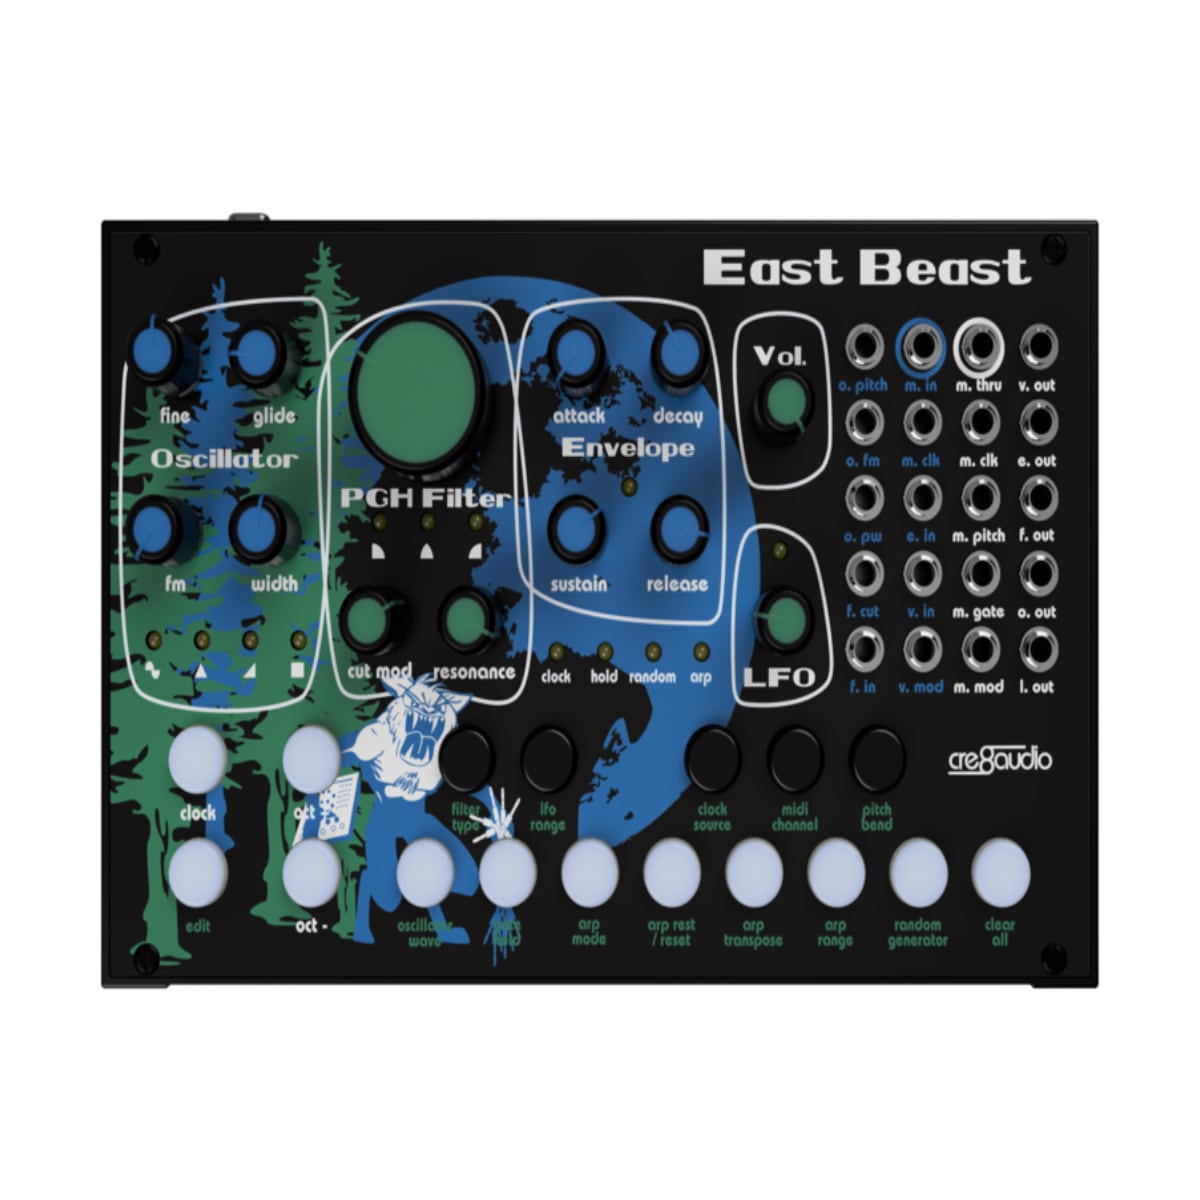 Cre8audio EastBeast fully analog East Coast style semi-modular synthesizer